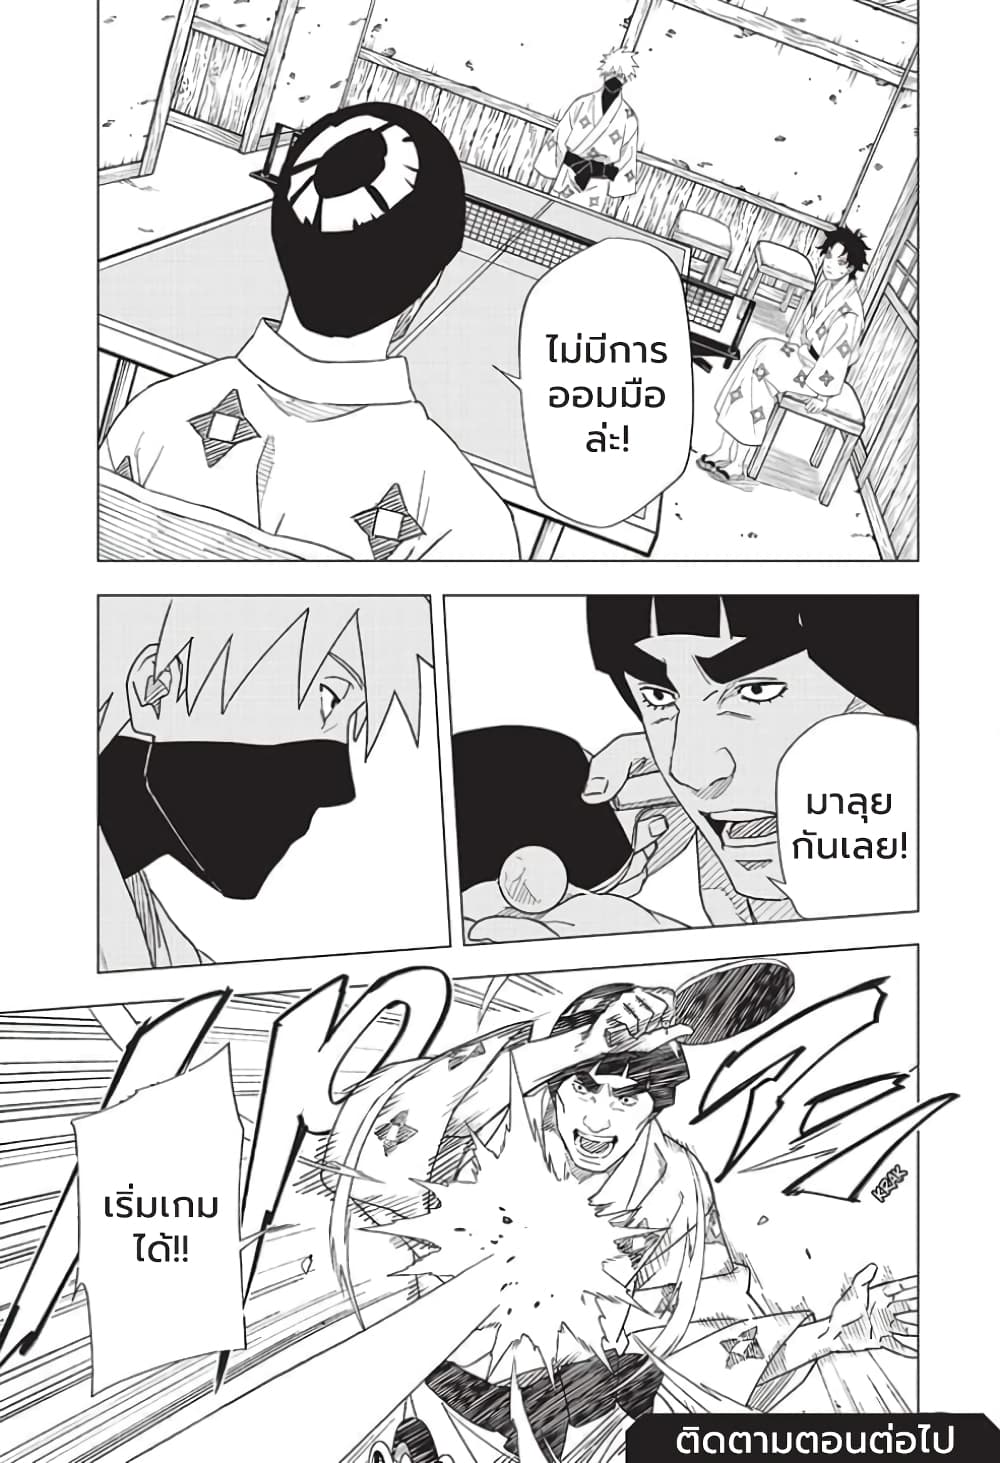 Naruto: Konoha’s Story - The Steam Ninja Scrolls: The Manga ตอนที่ 7